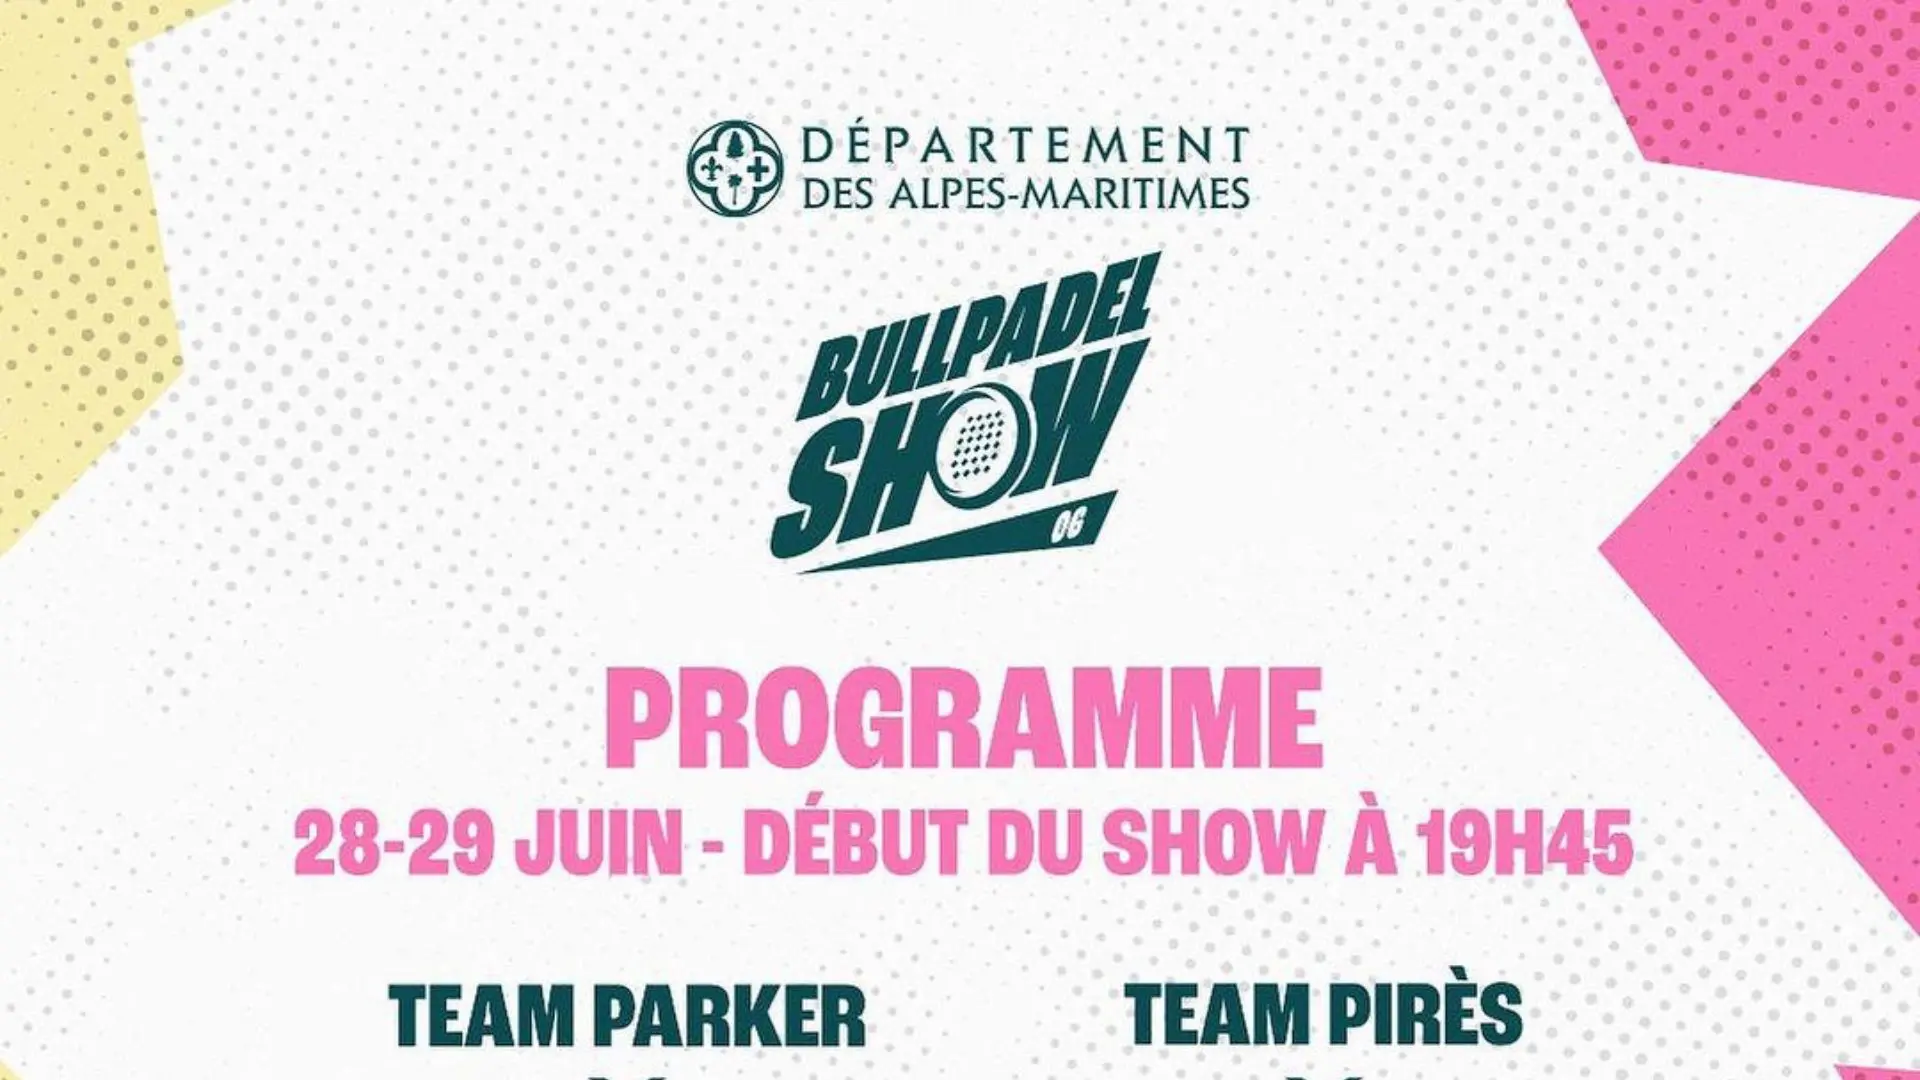 Bullpadel Show 06 program